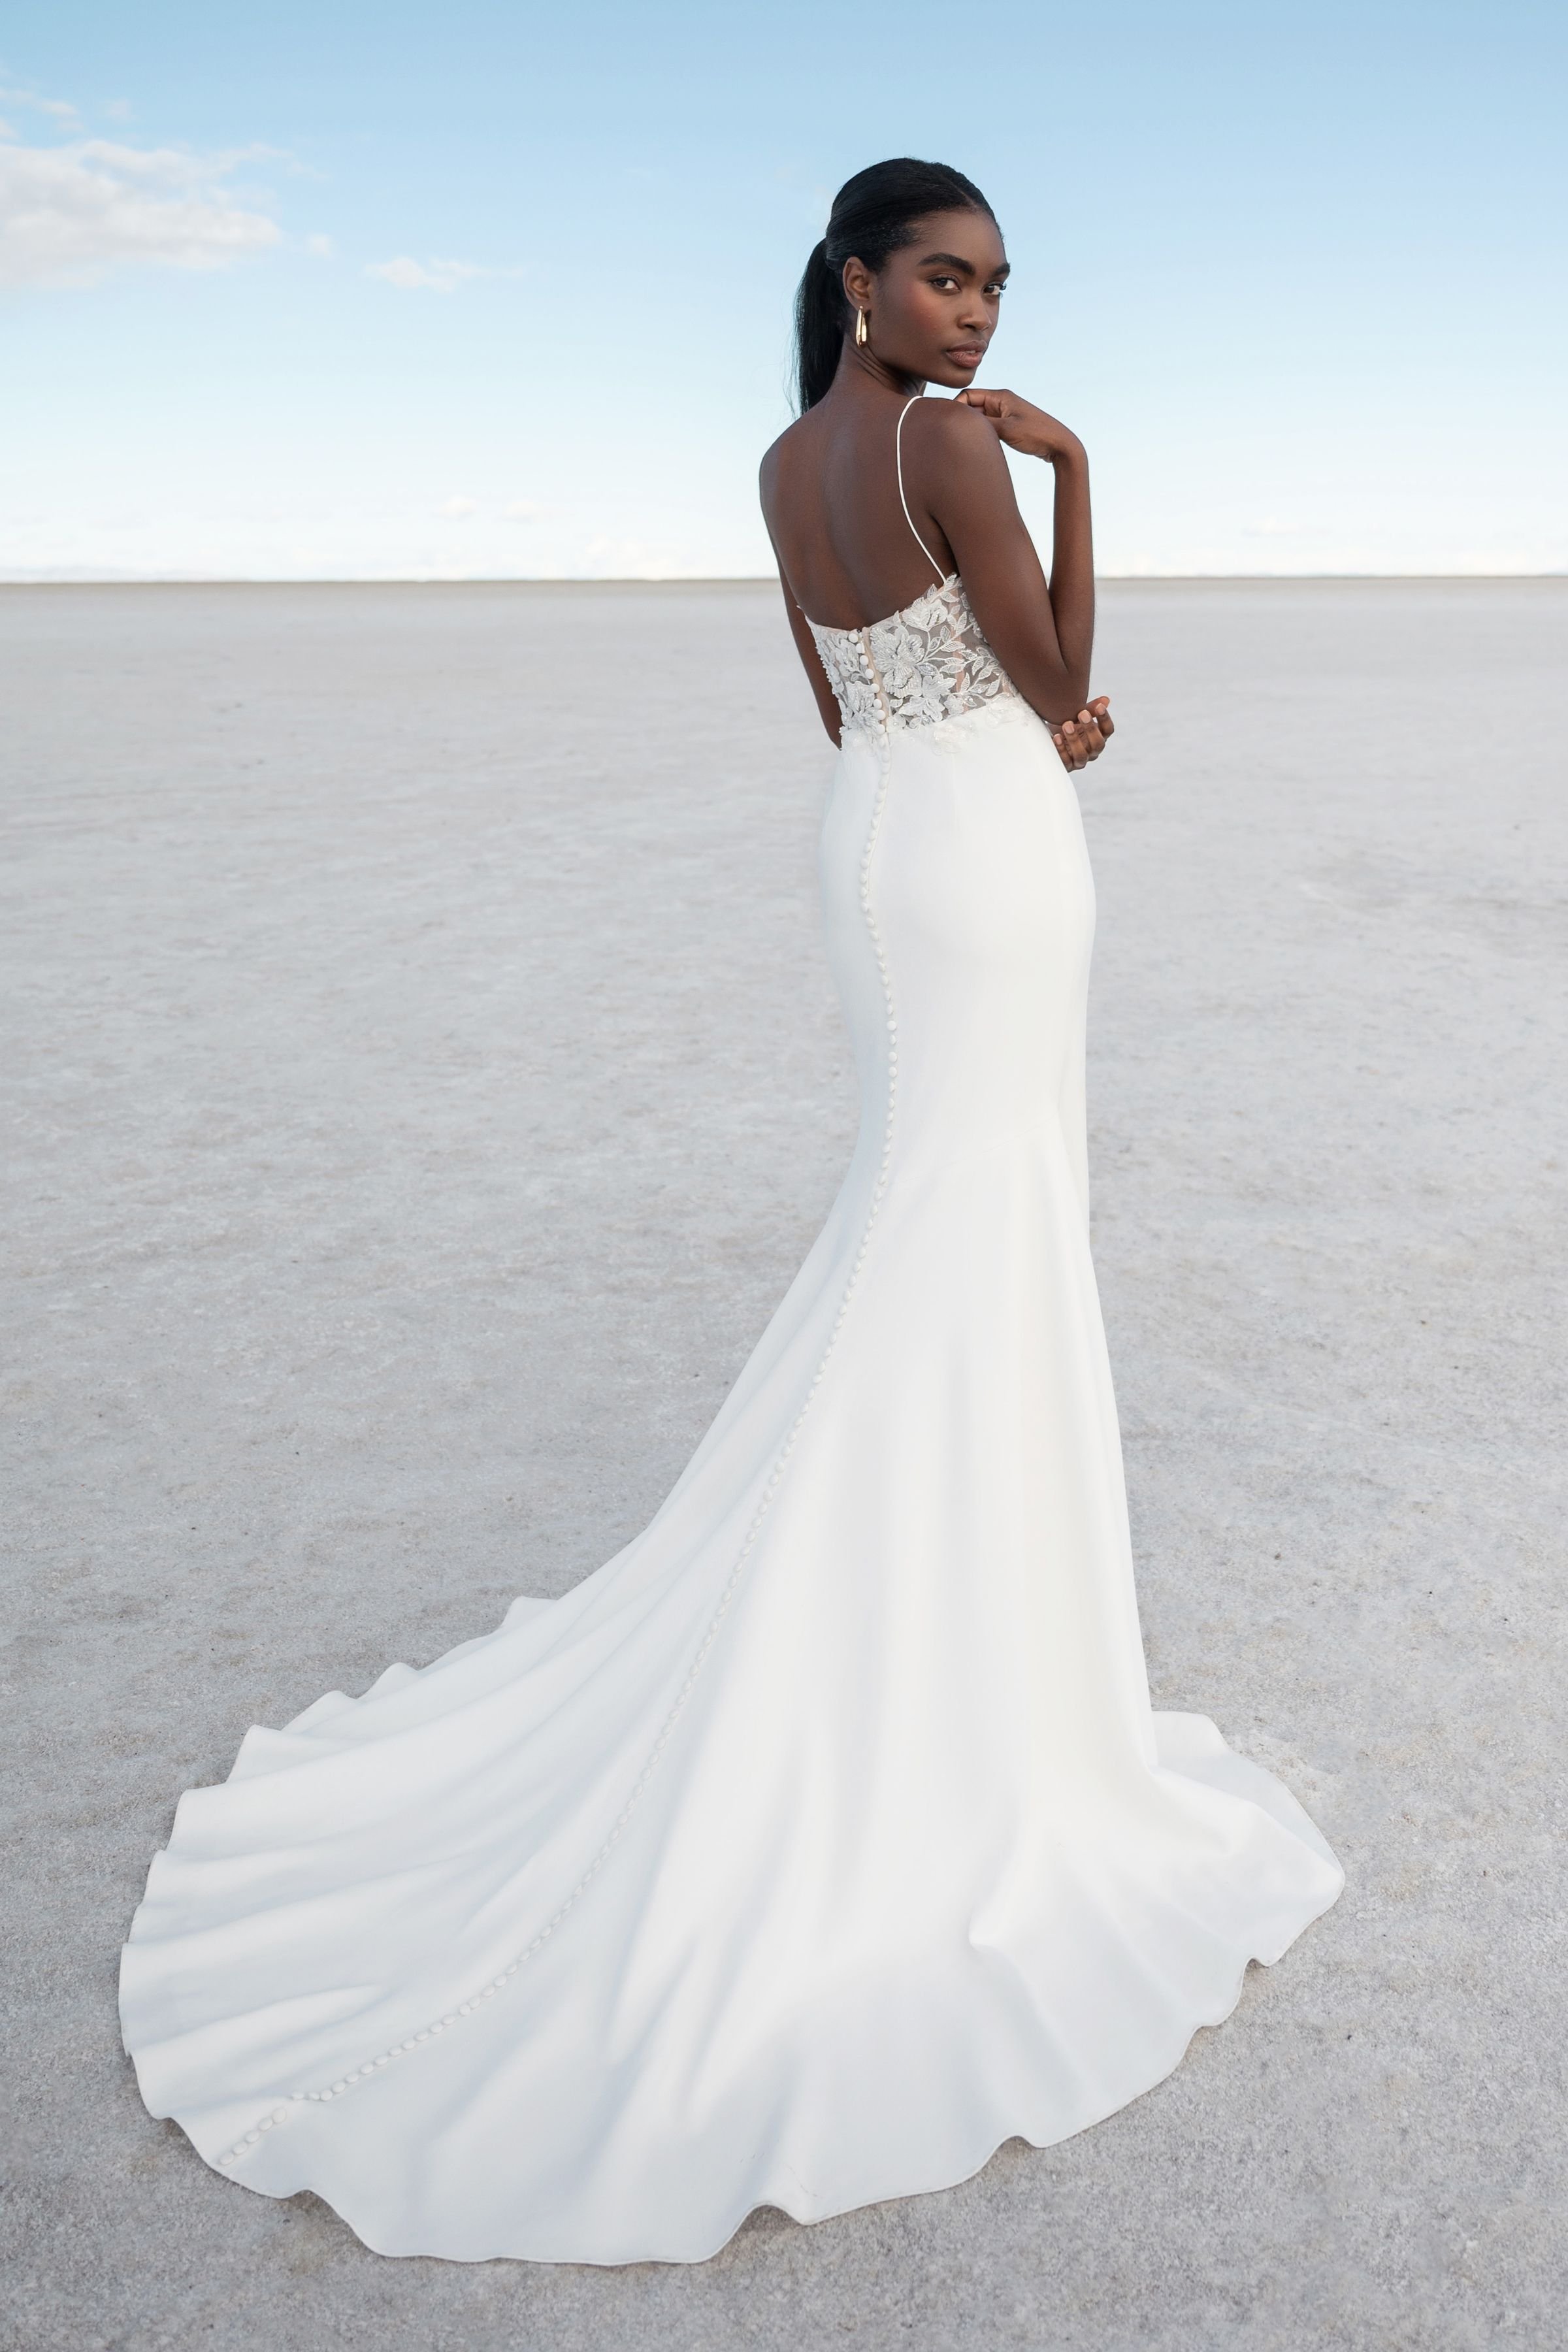 blanc-de-blanc-bridal-boutique-pittsburgh-cleveland-dress-wedding-gown-Carmela.jpeg